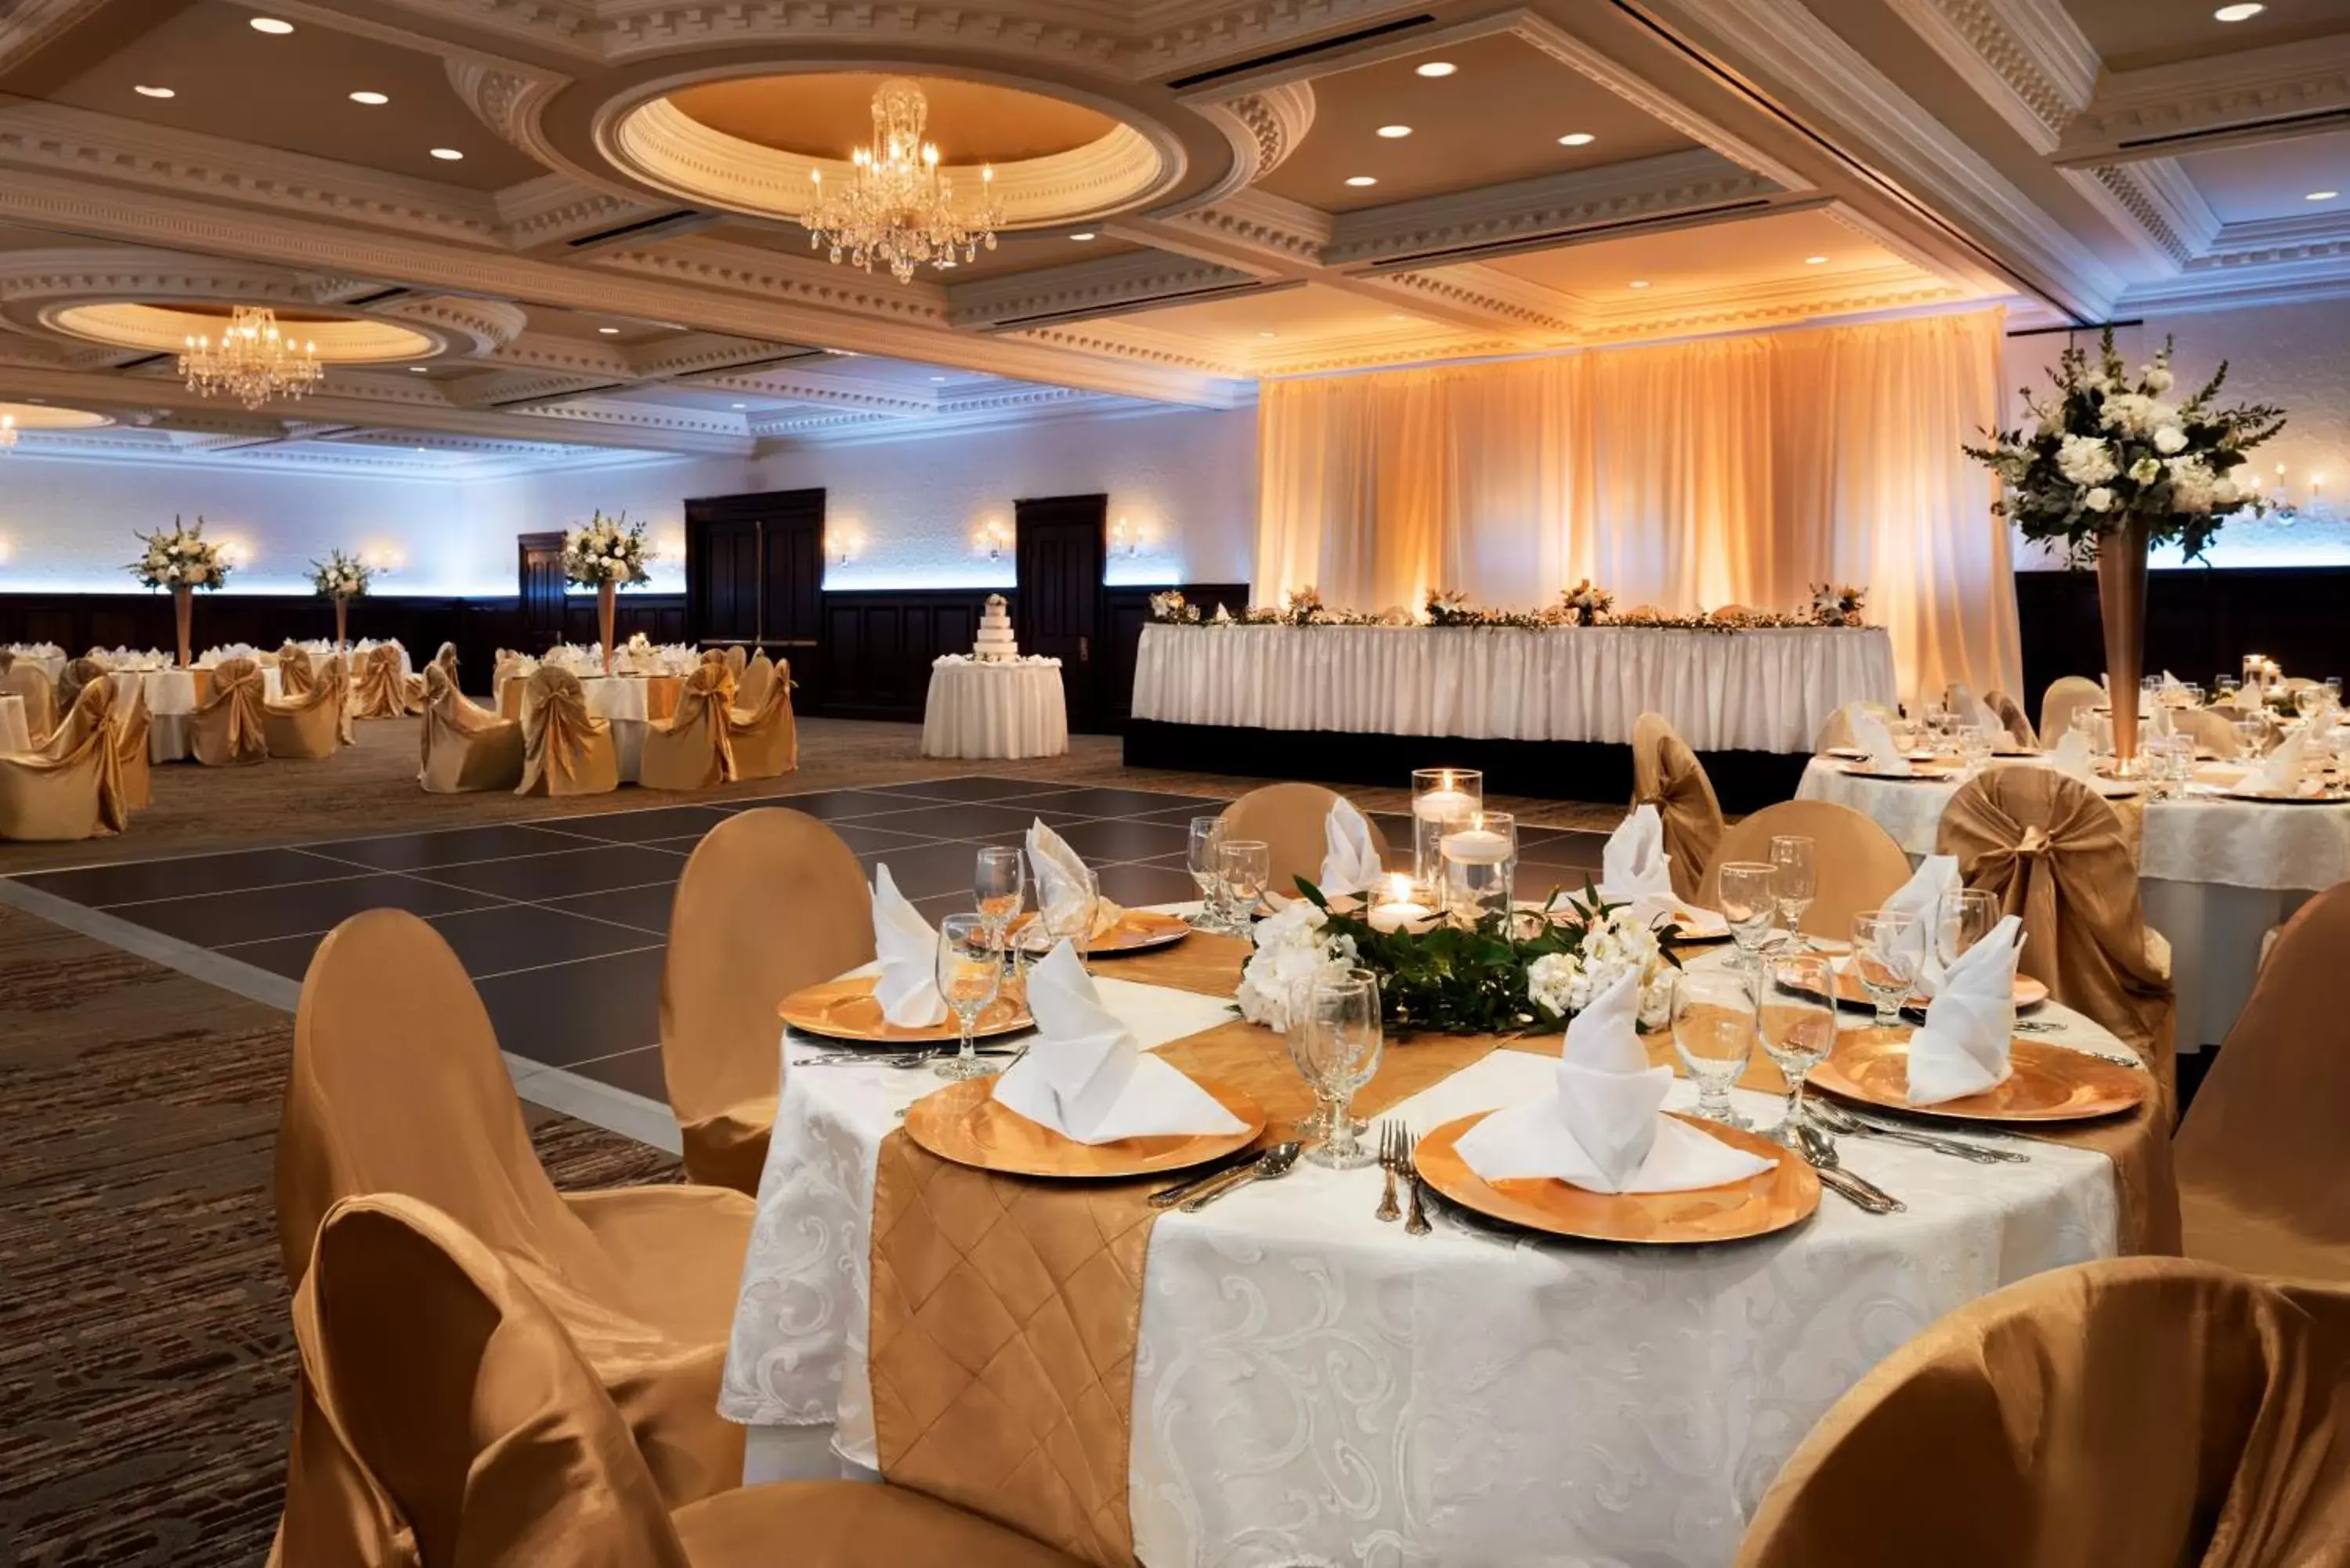 Banquet/Function facilities, Banquet Facilities in Radisson Hotel Cincinnati Riverfront